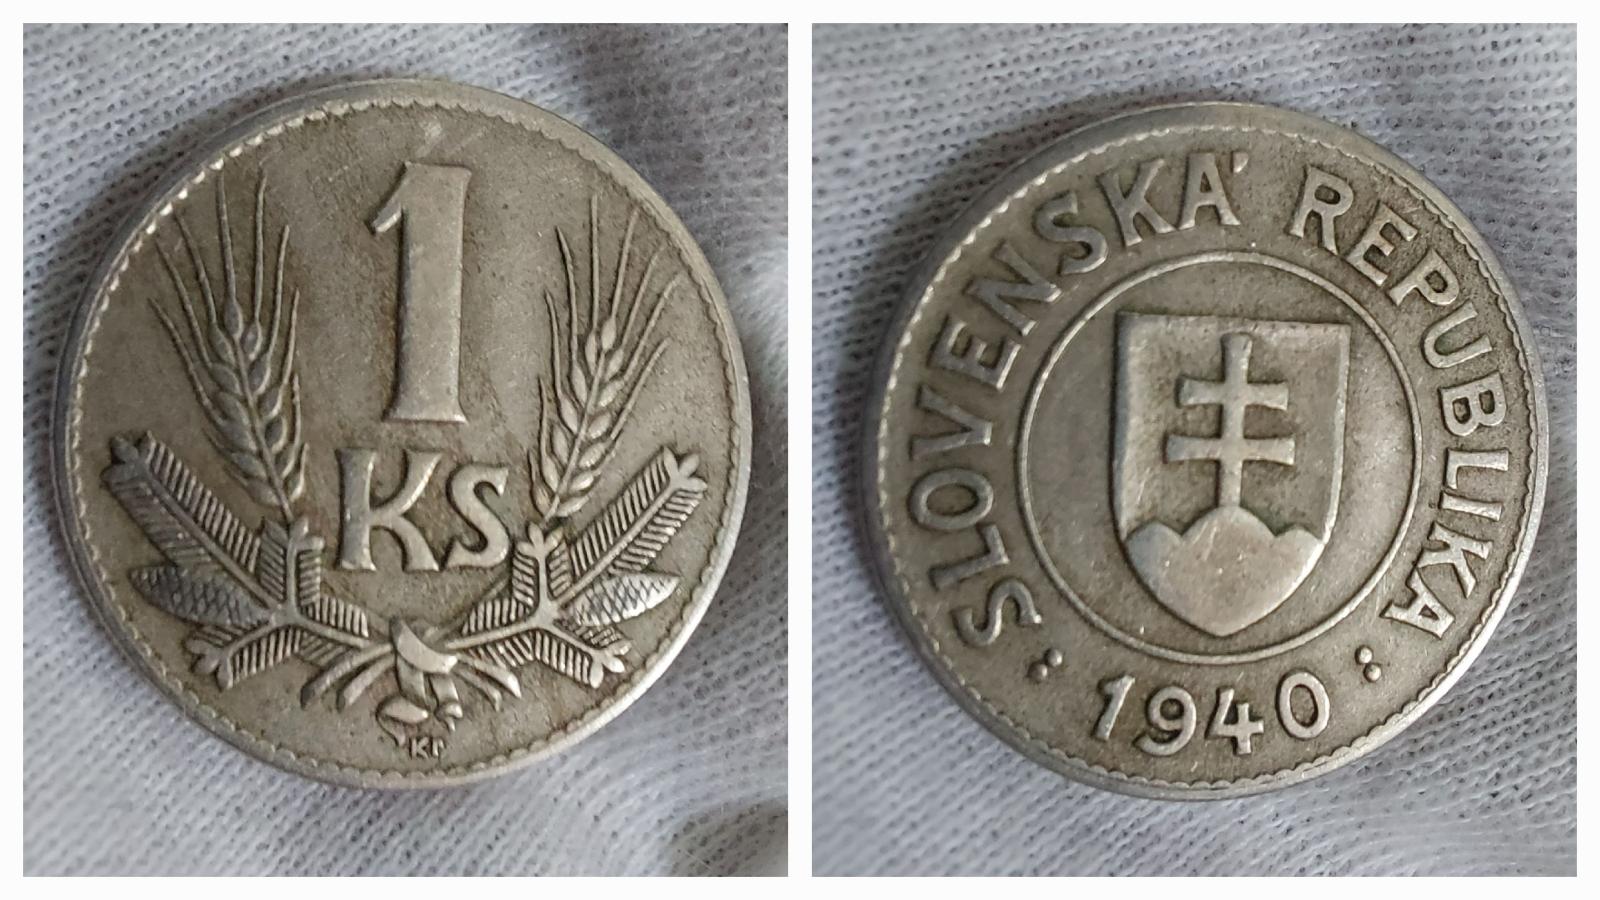 ♠️ Stará minca - 1 koruna 1940, Slovensko / 121 - Zberateľstvo